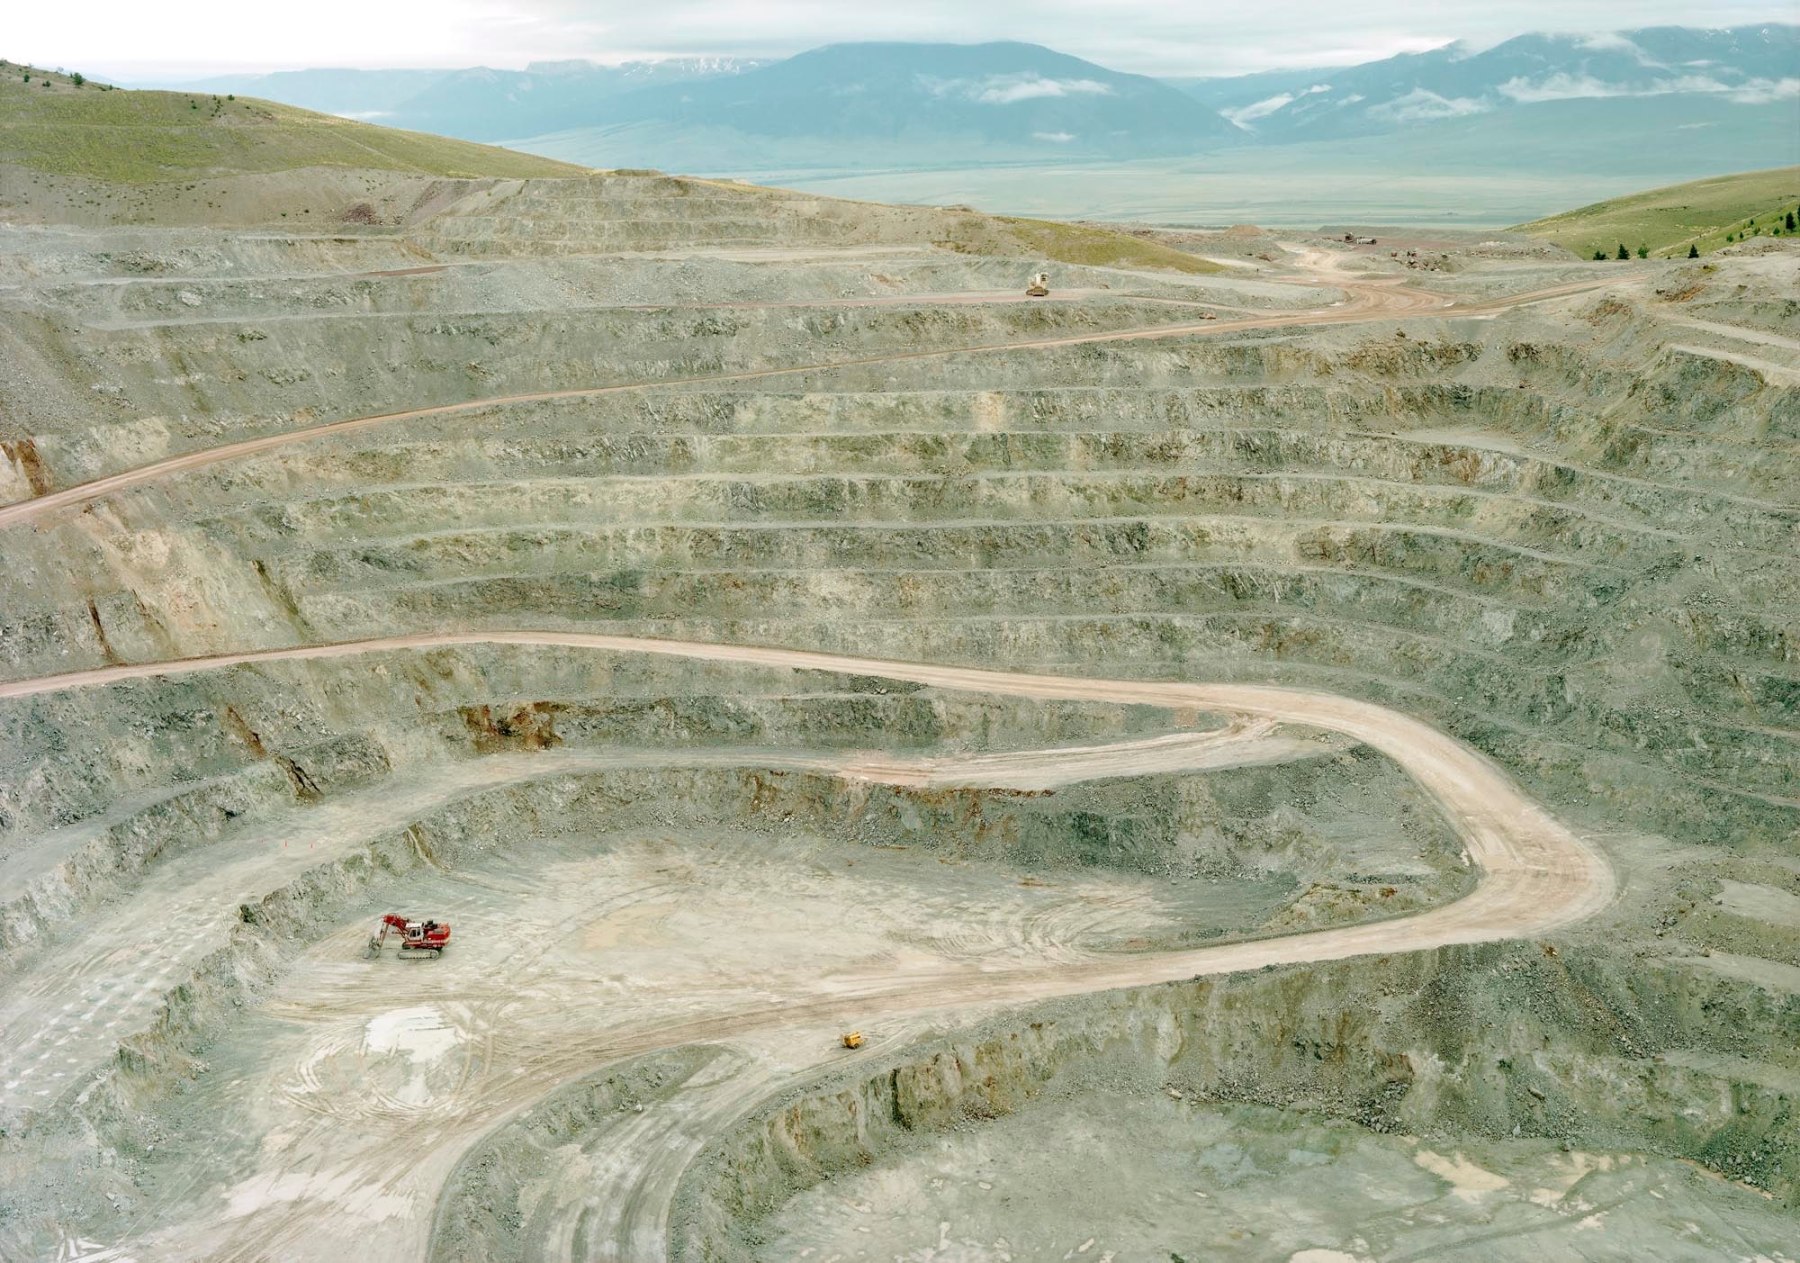 Untitled (Talc mine with truck), Cameron, Montana, 2009, 39 x 55 or 55 x 77 inch chromogenic print